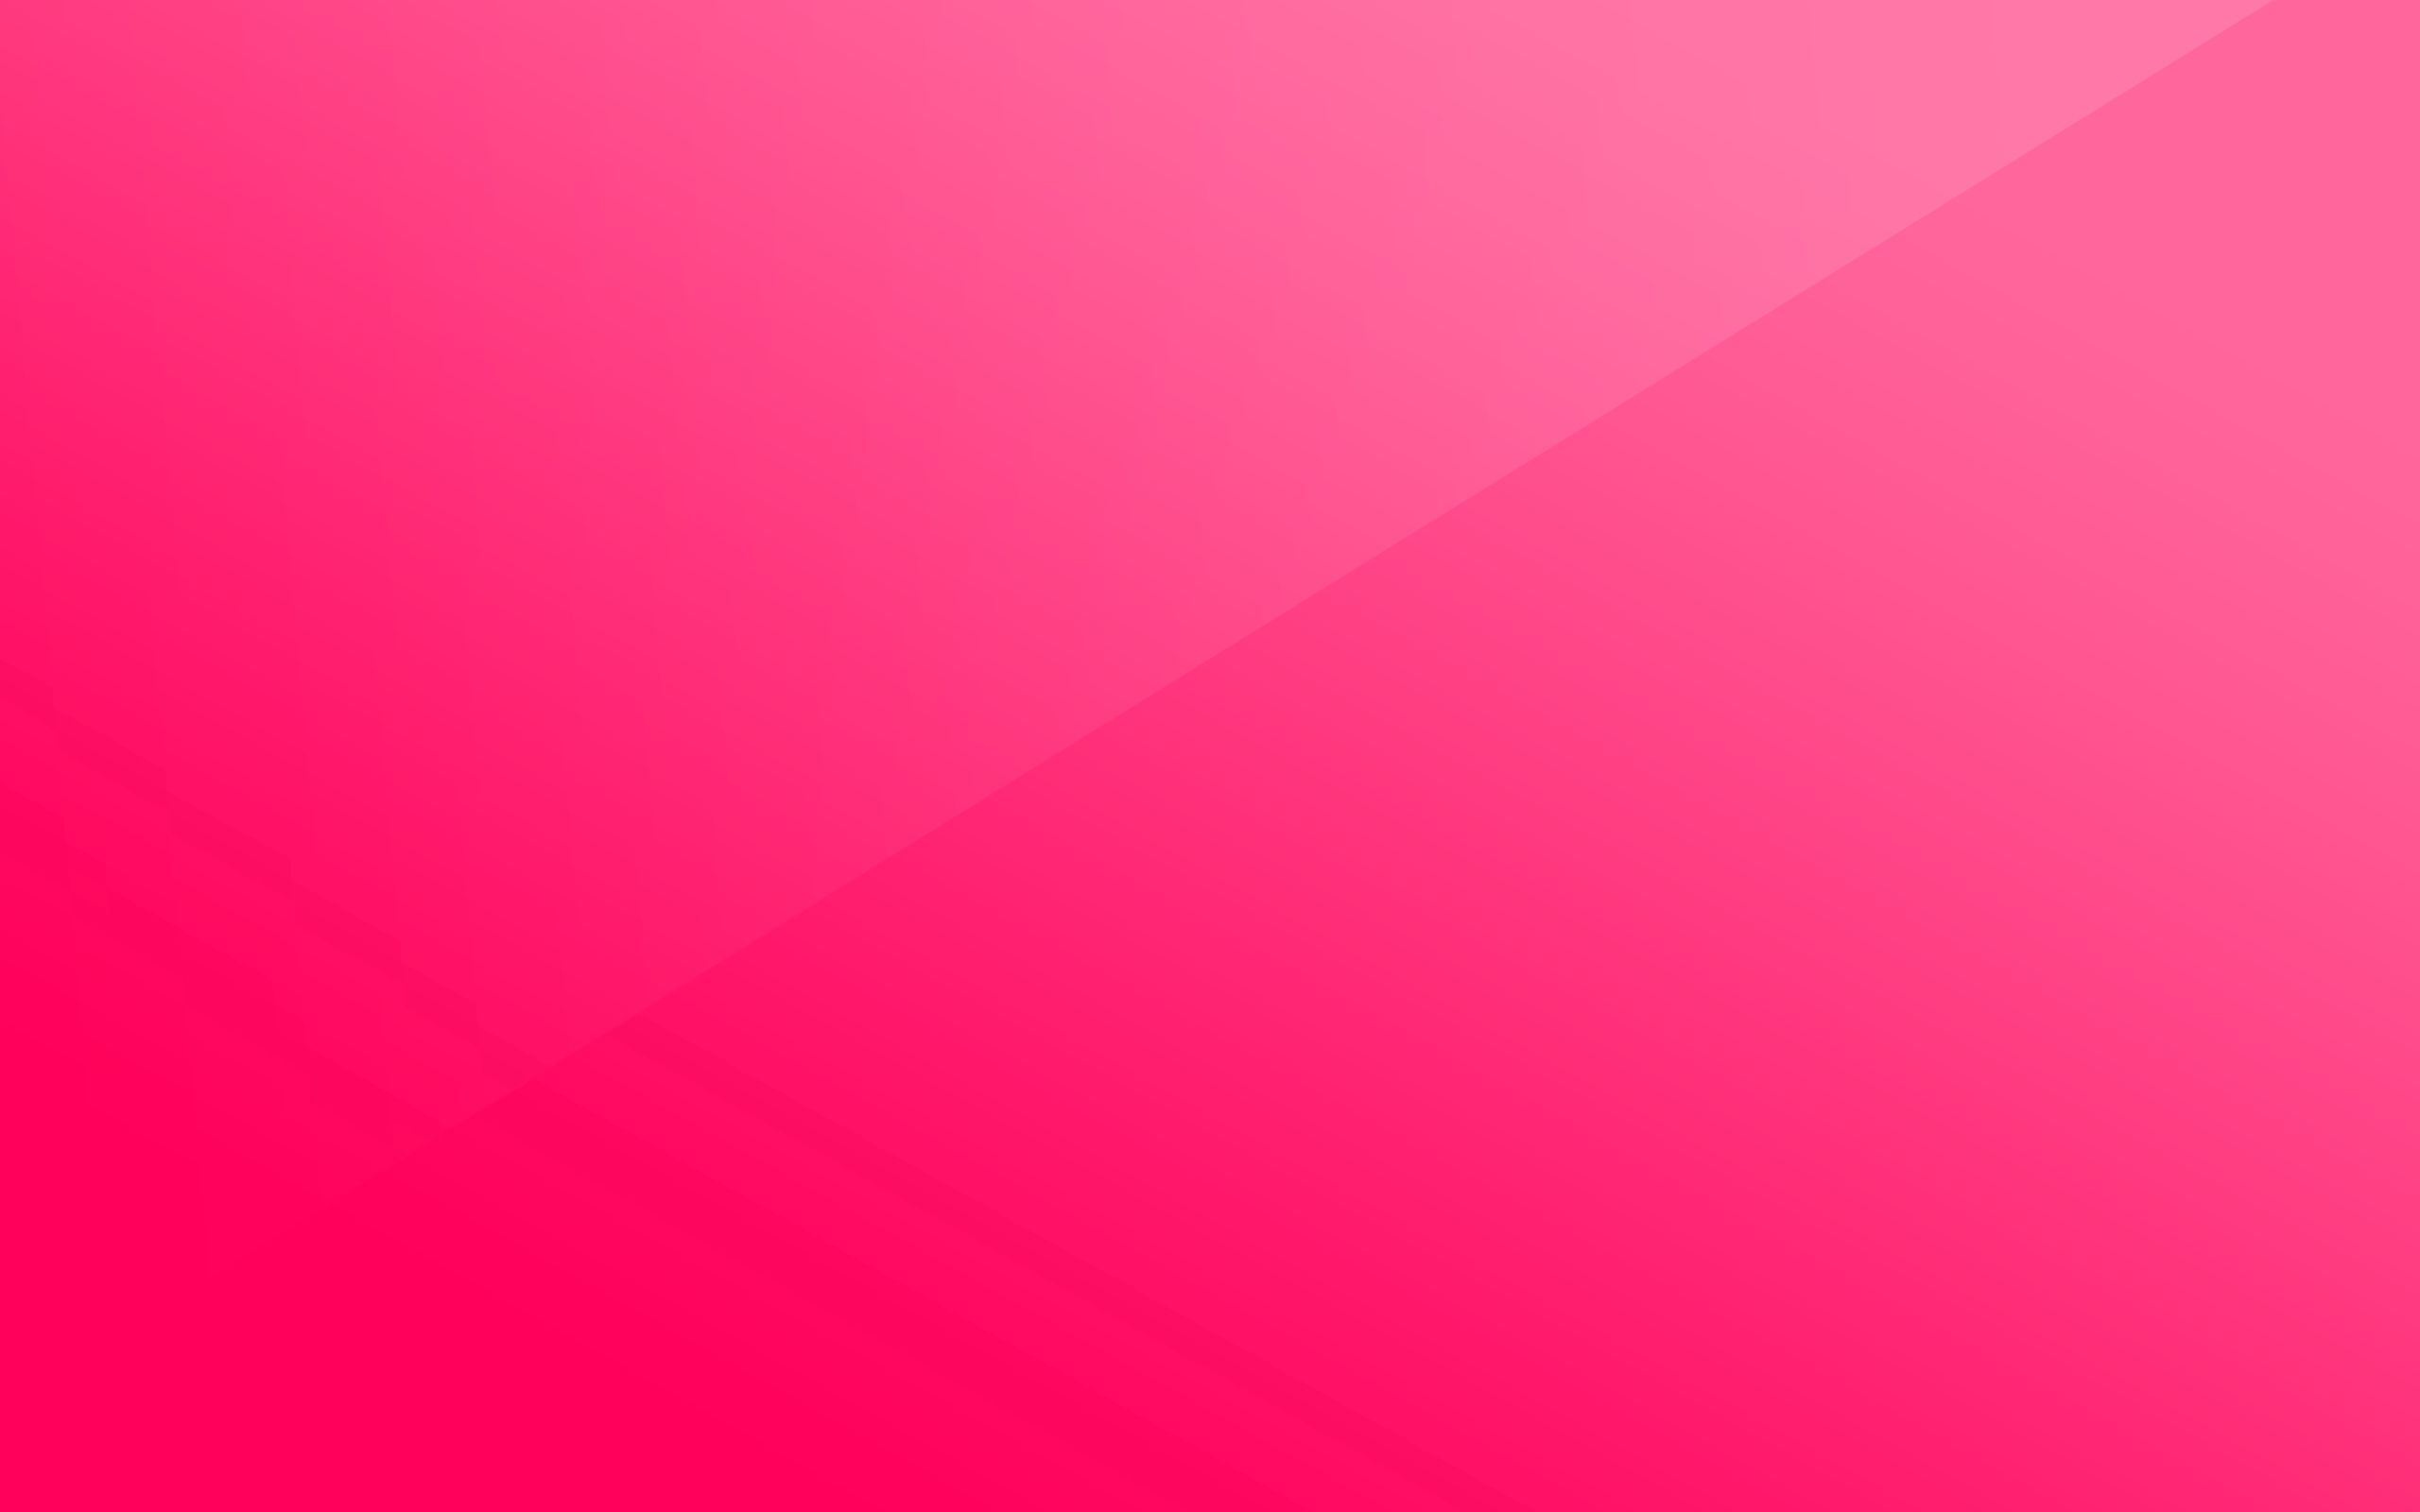 Free HD Pink